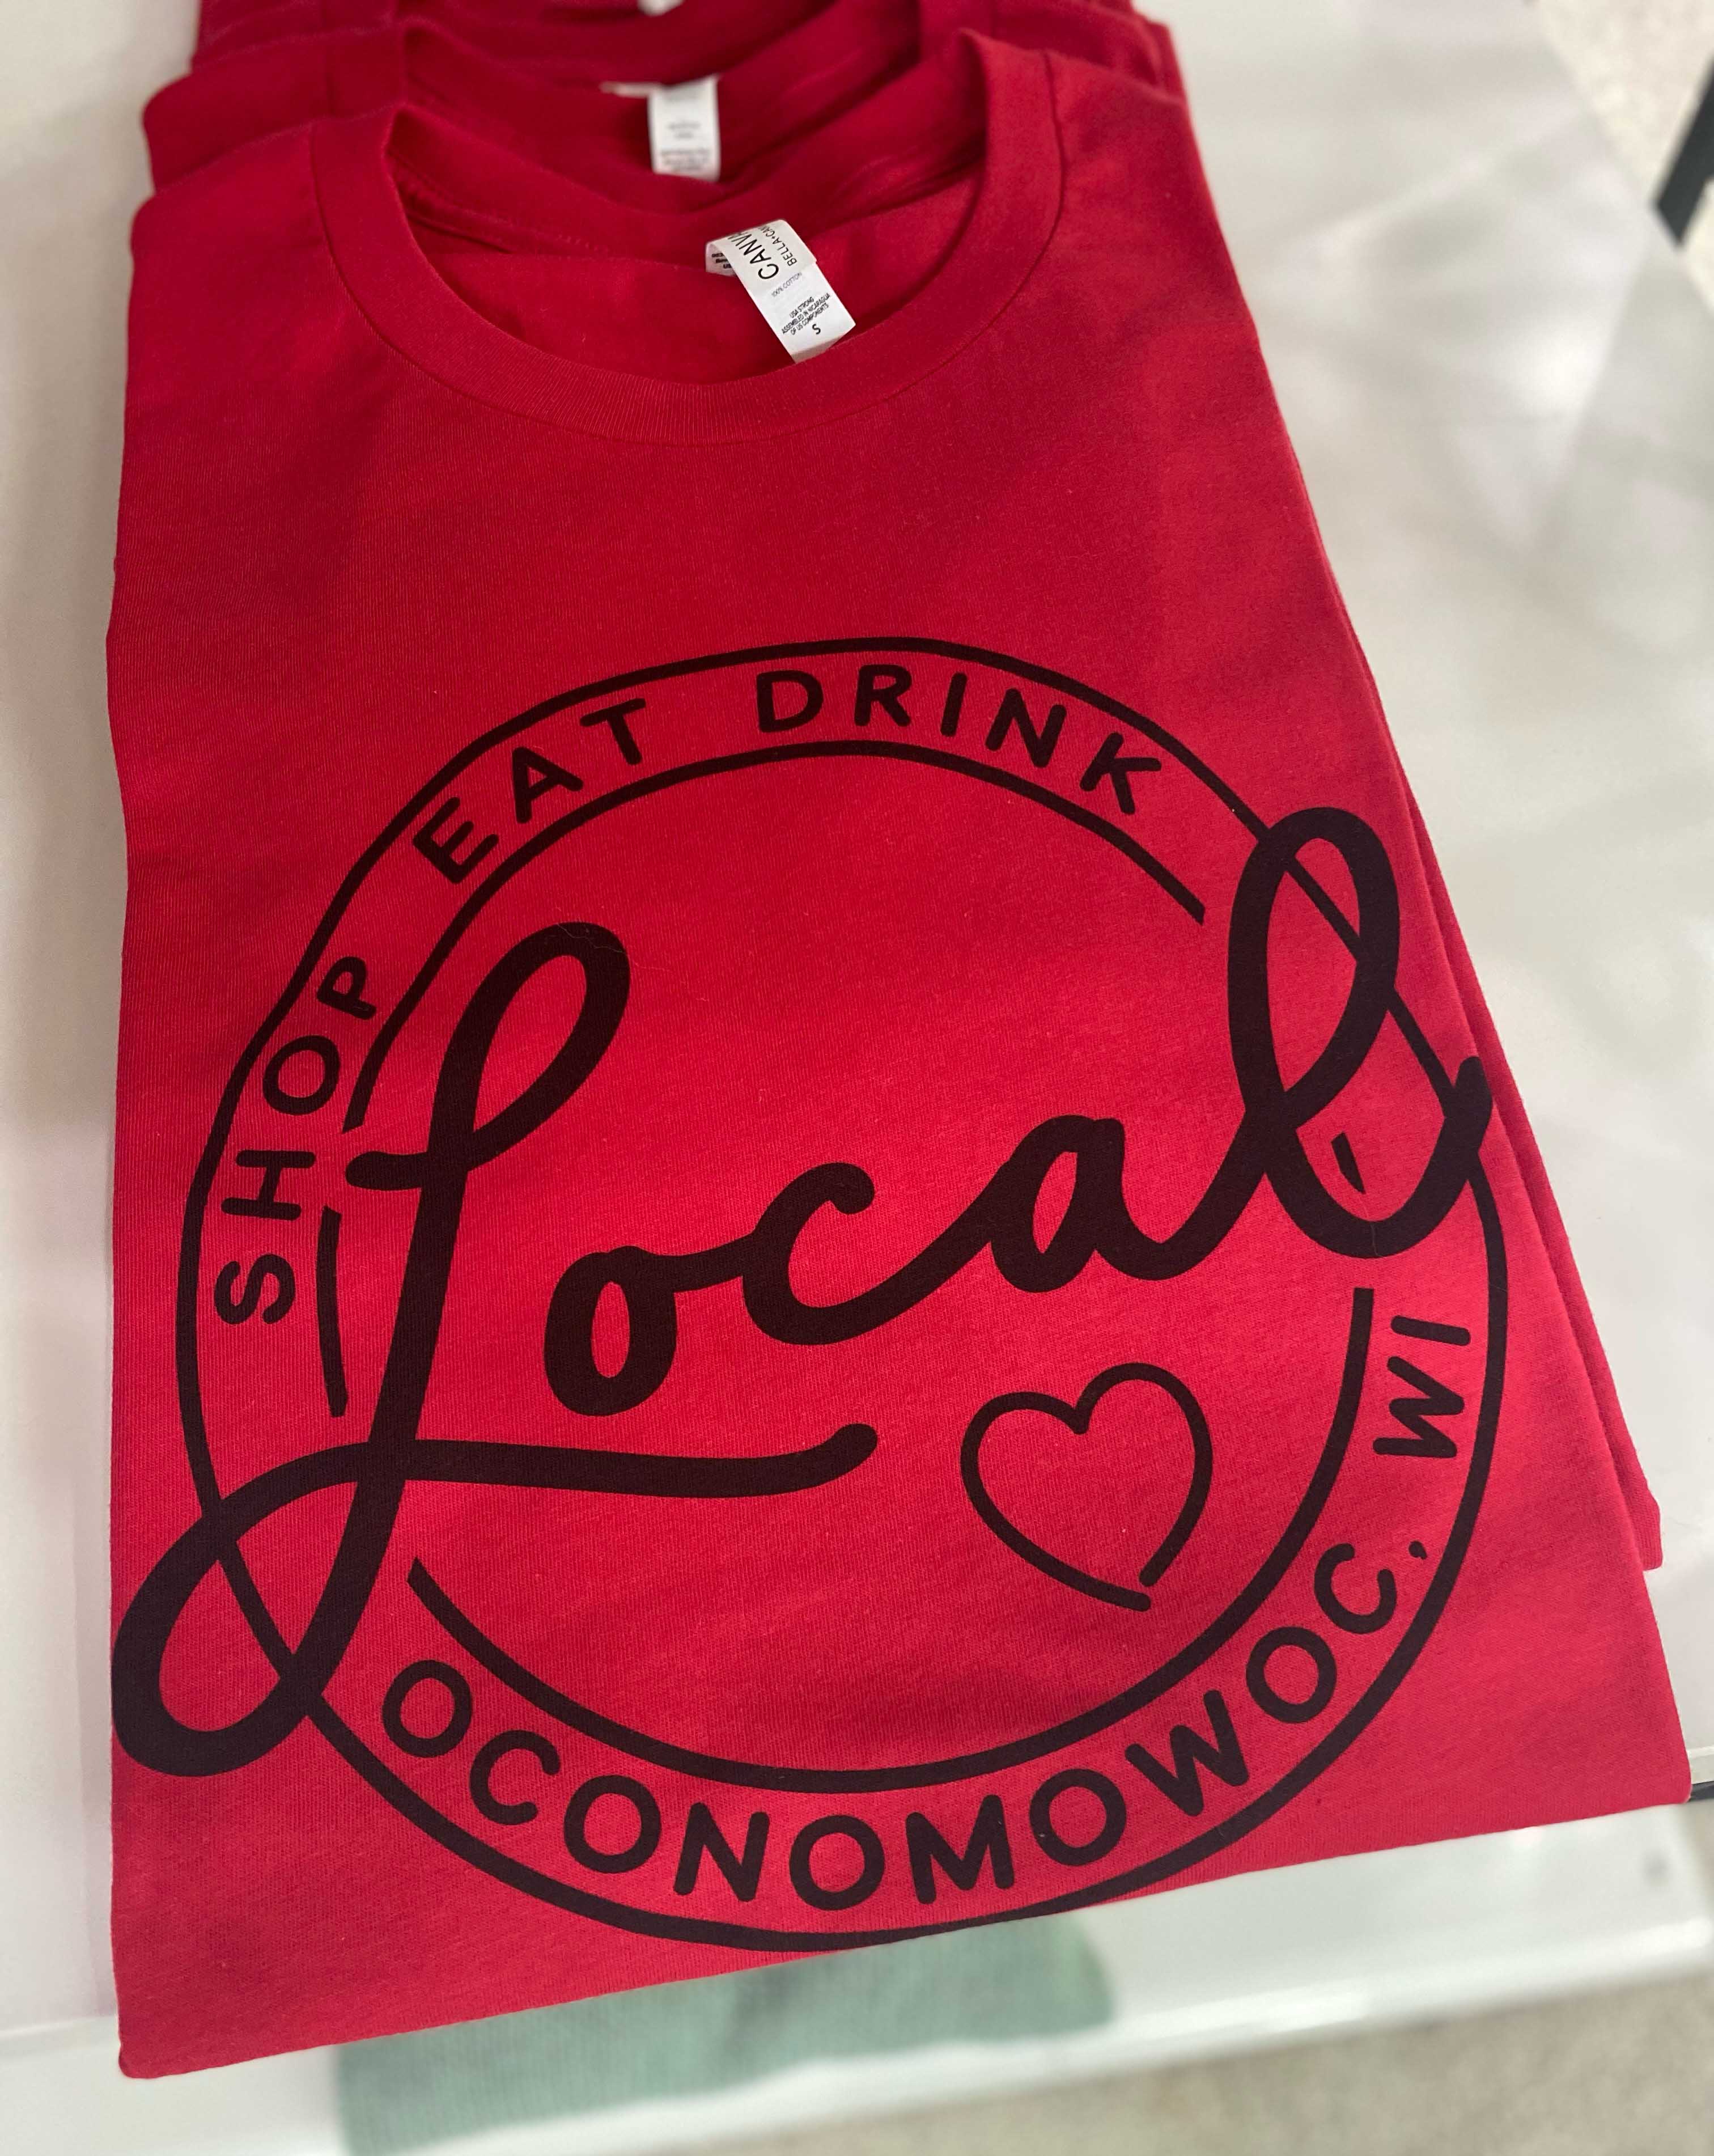 Shop Eat Drink Local Oconomowoc T-shirt